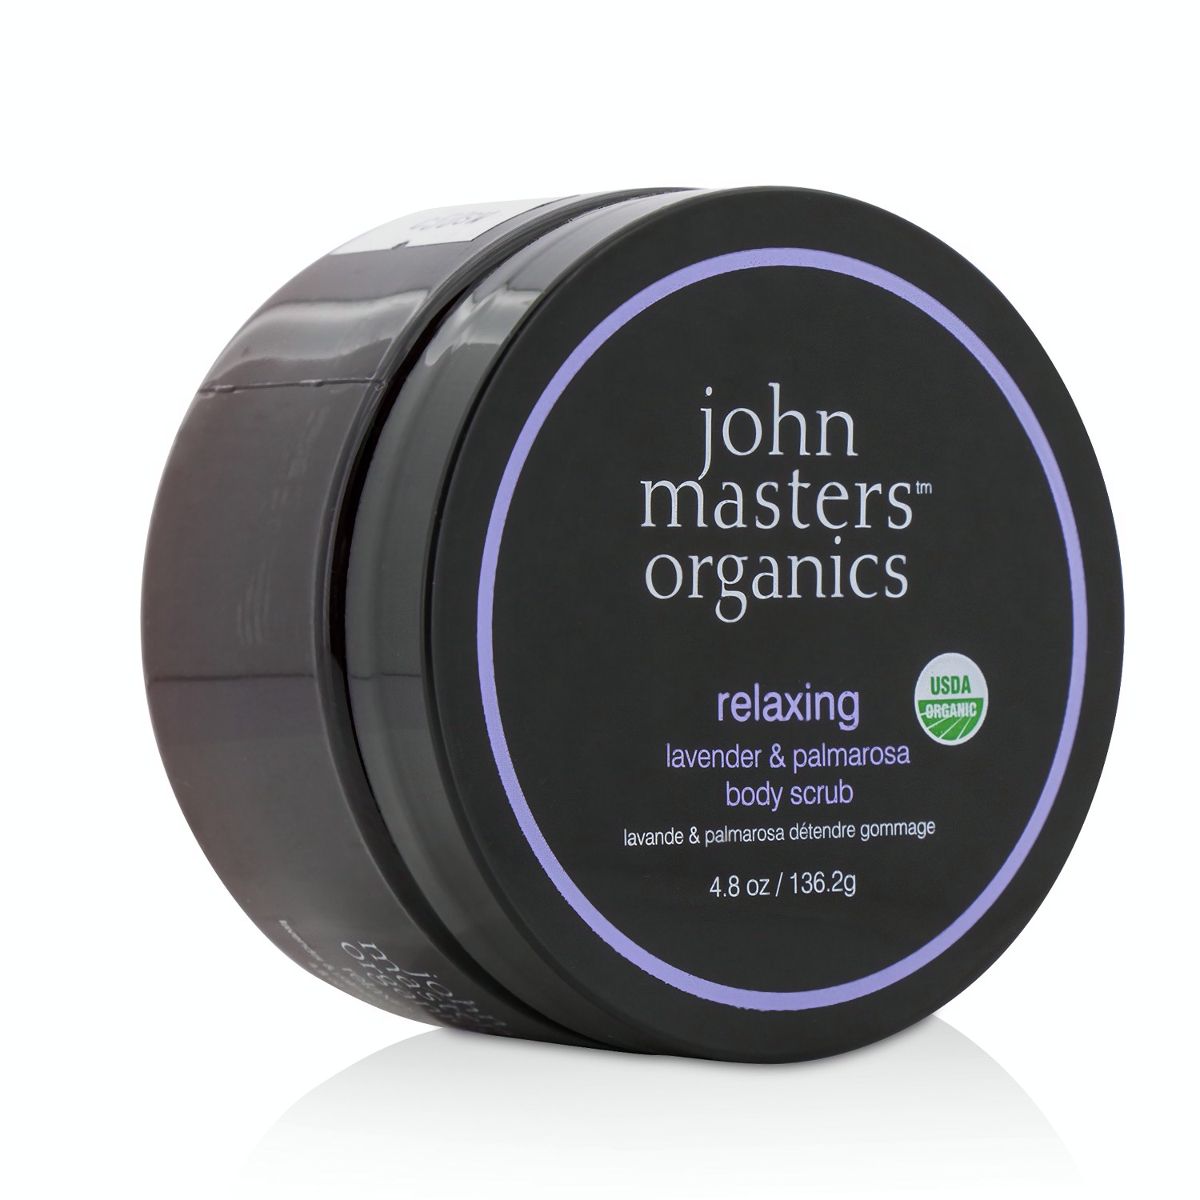 Lavender  Palmarosa Body Scrub Relaxing John Masters Organics Image